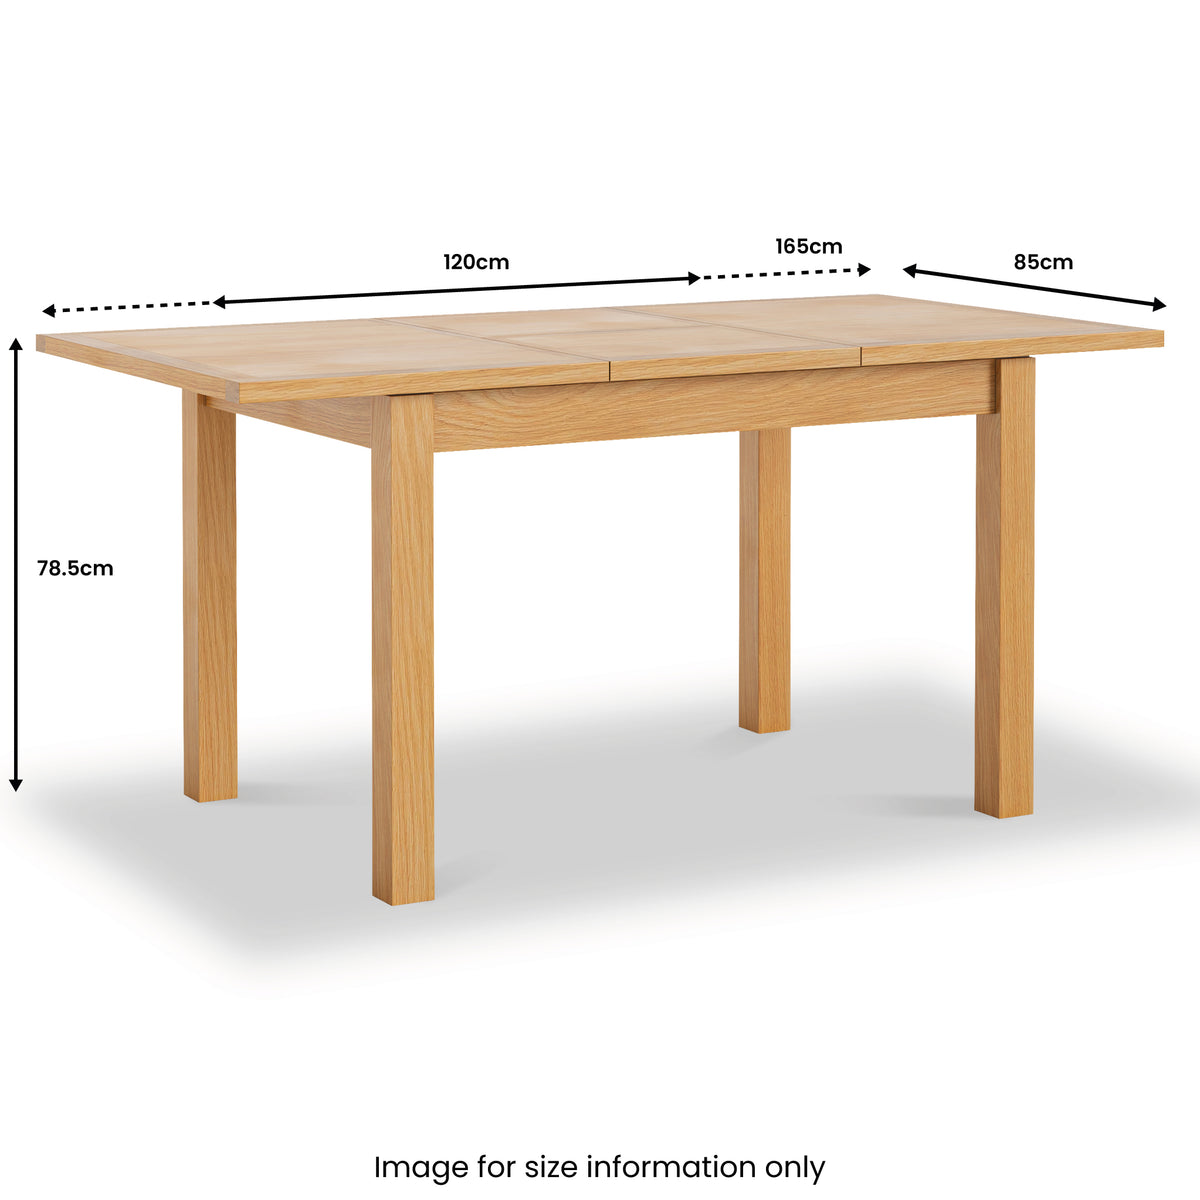 London Oak 120-165cm Extending Dining Table dimensions